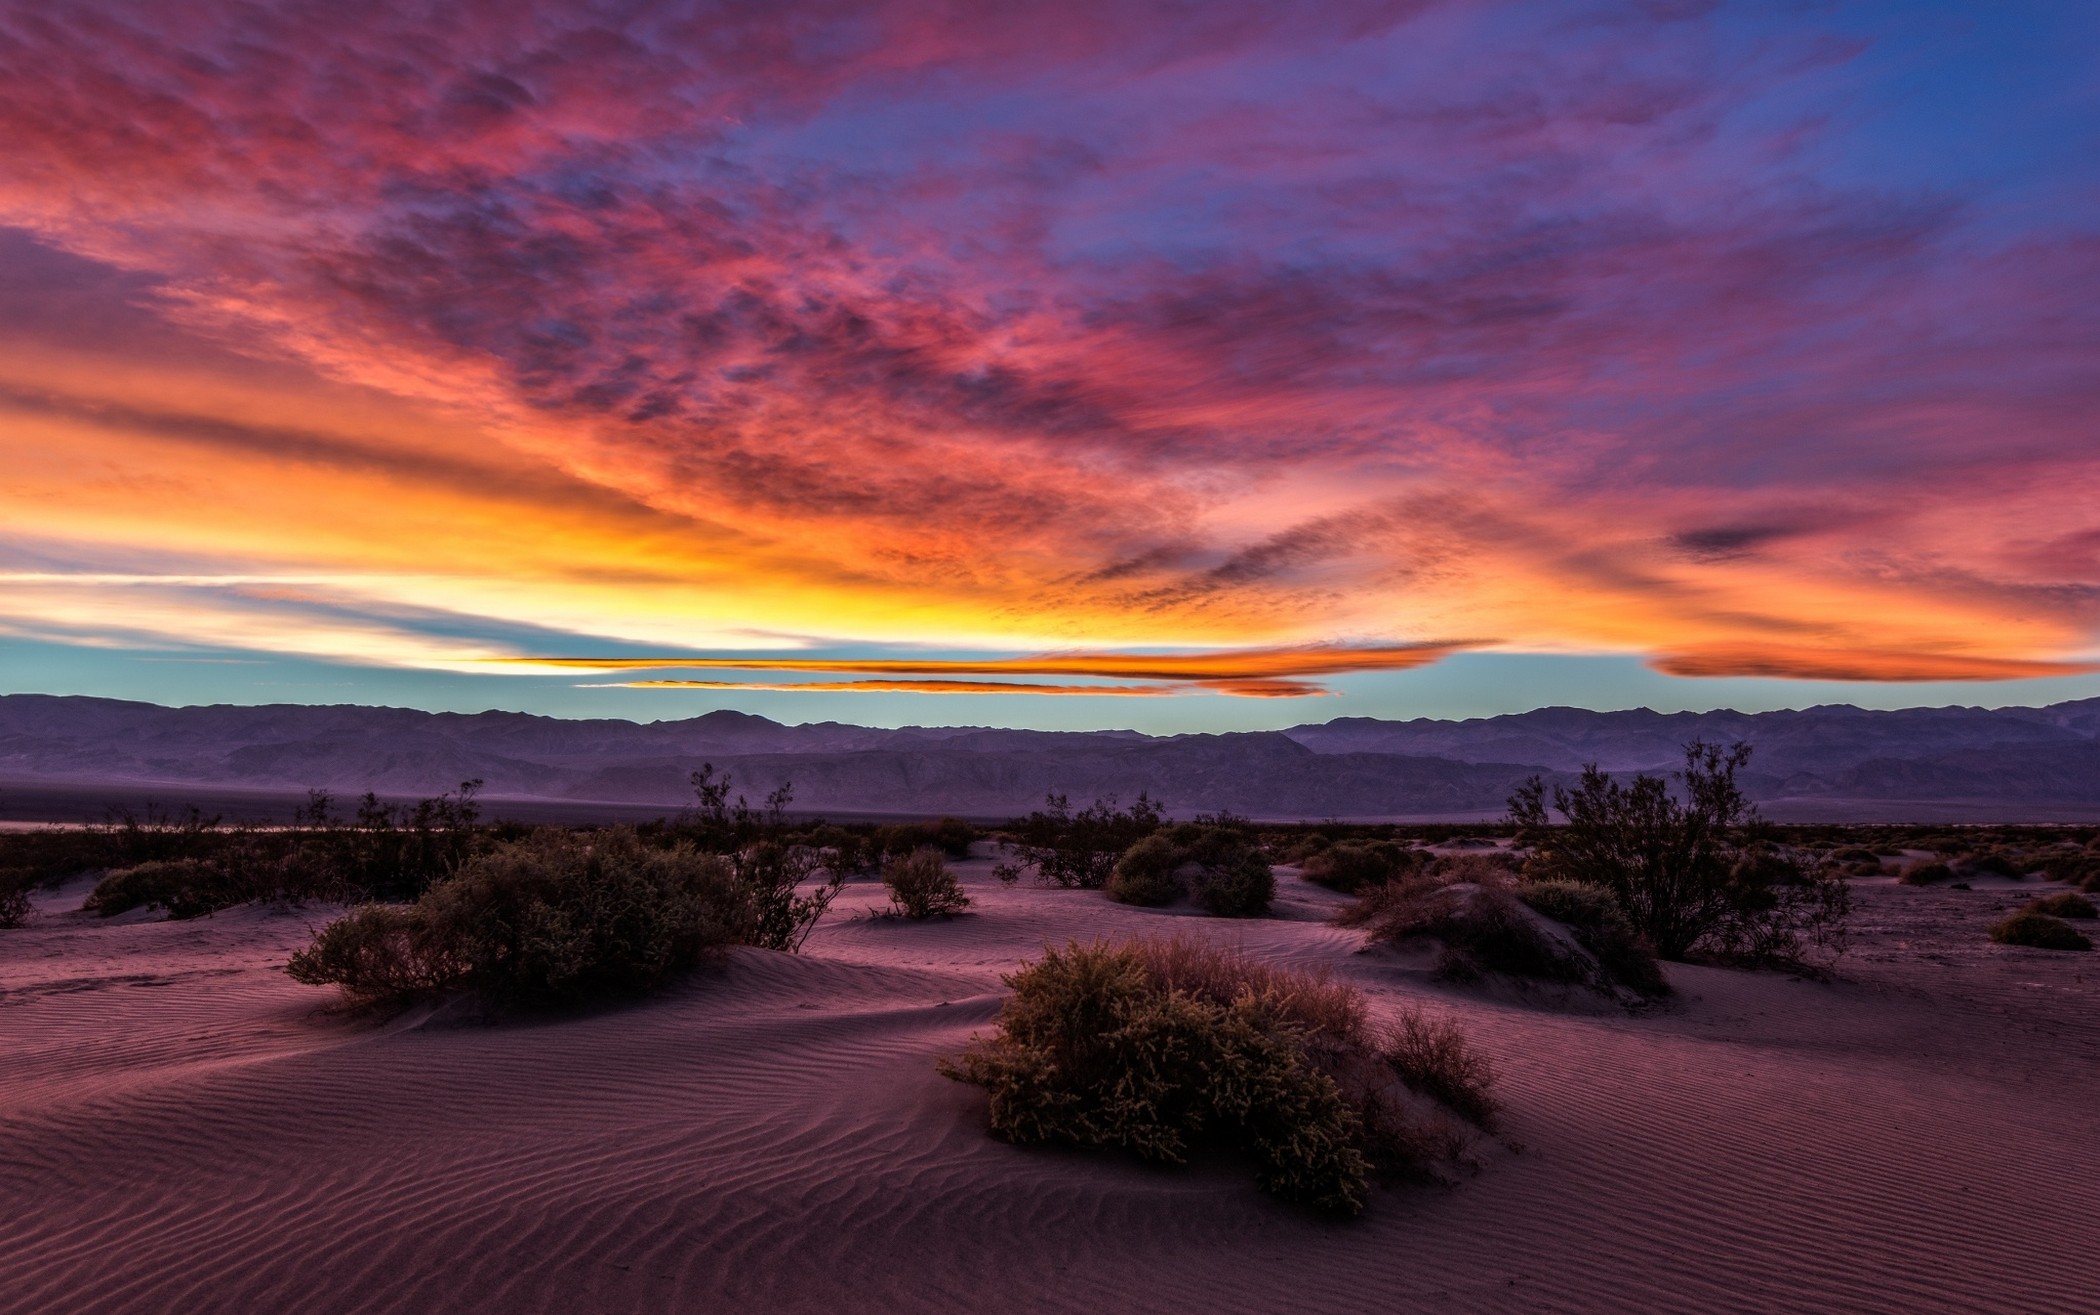 Landscape Nature Desert Sunset Death Valley Sand Mountains Shrubs Sky Clouds Dunes 2100x1315